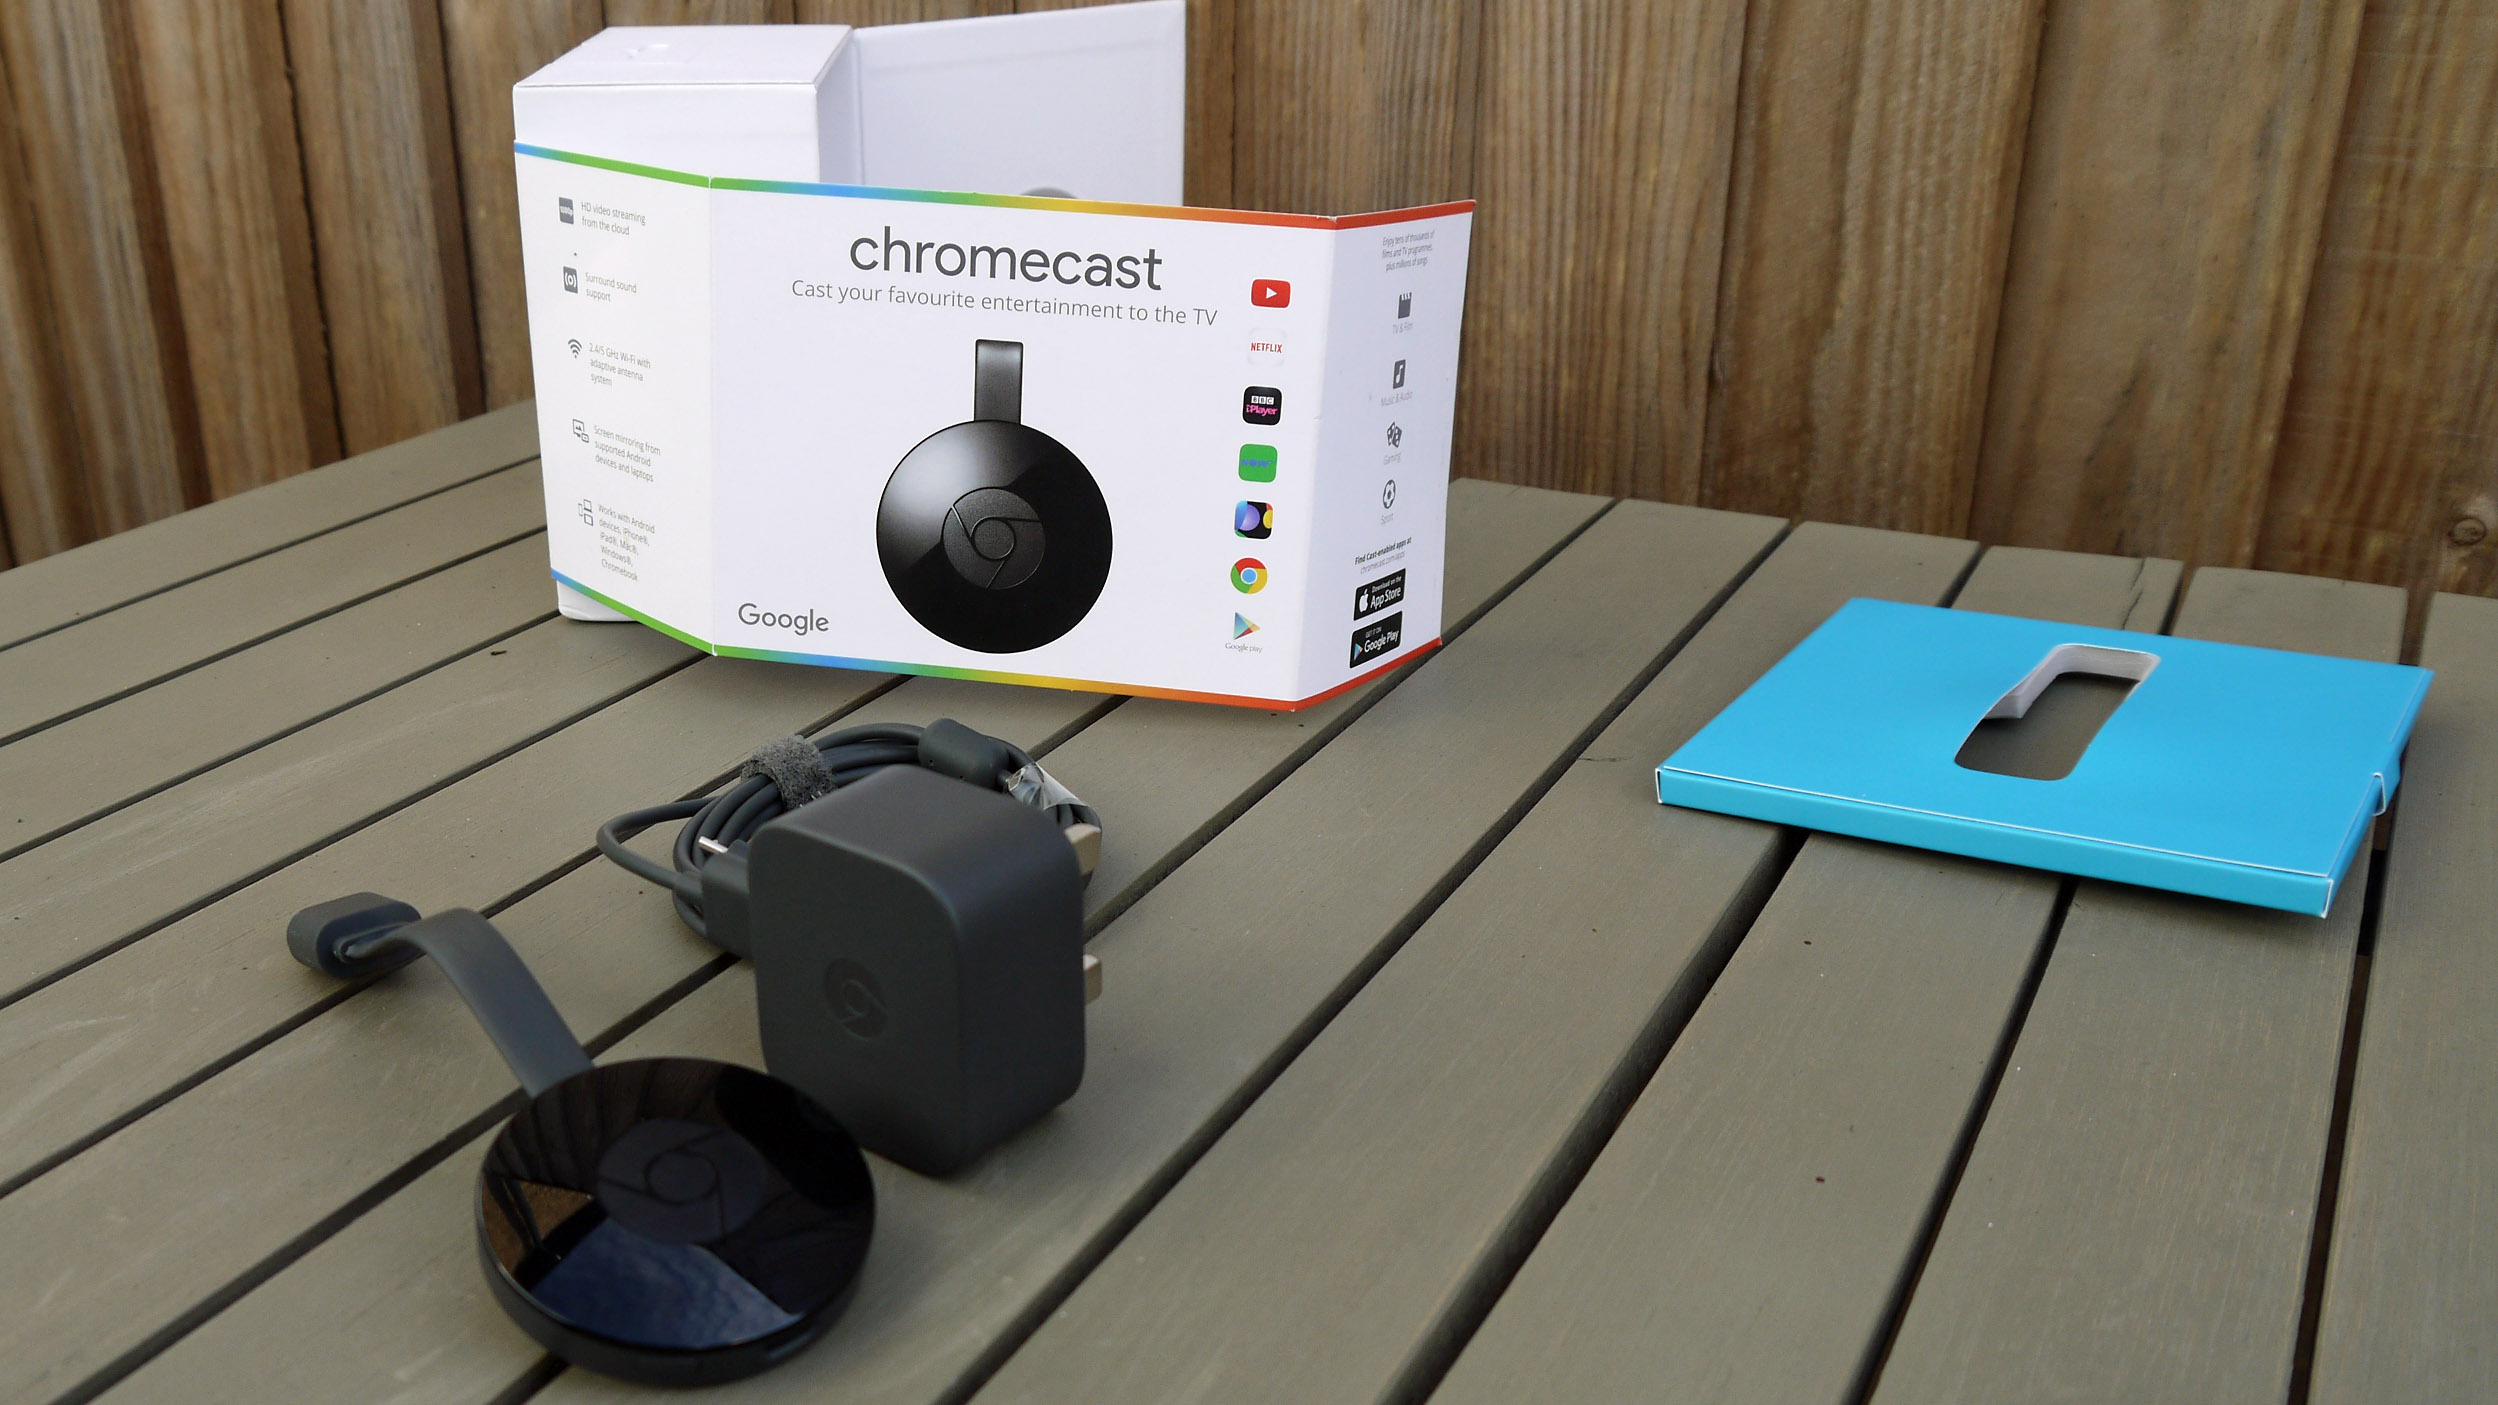 google chromecast setup new wifi